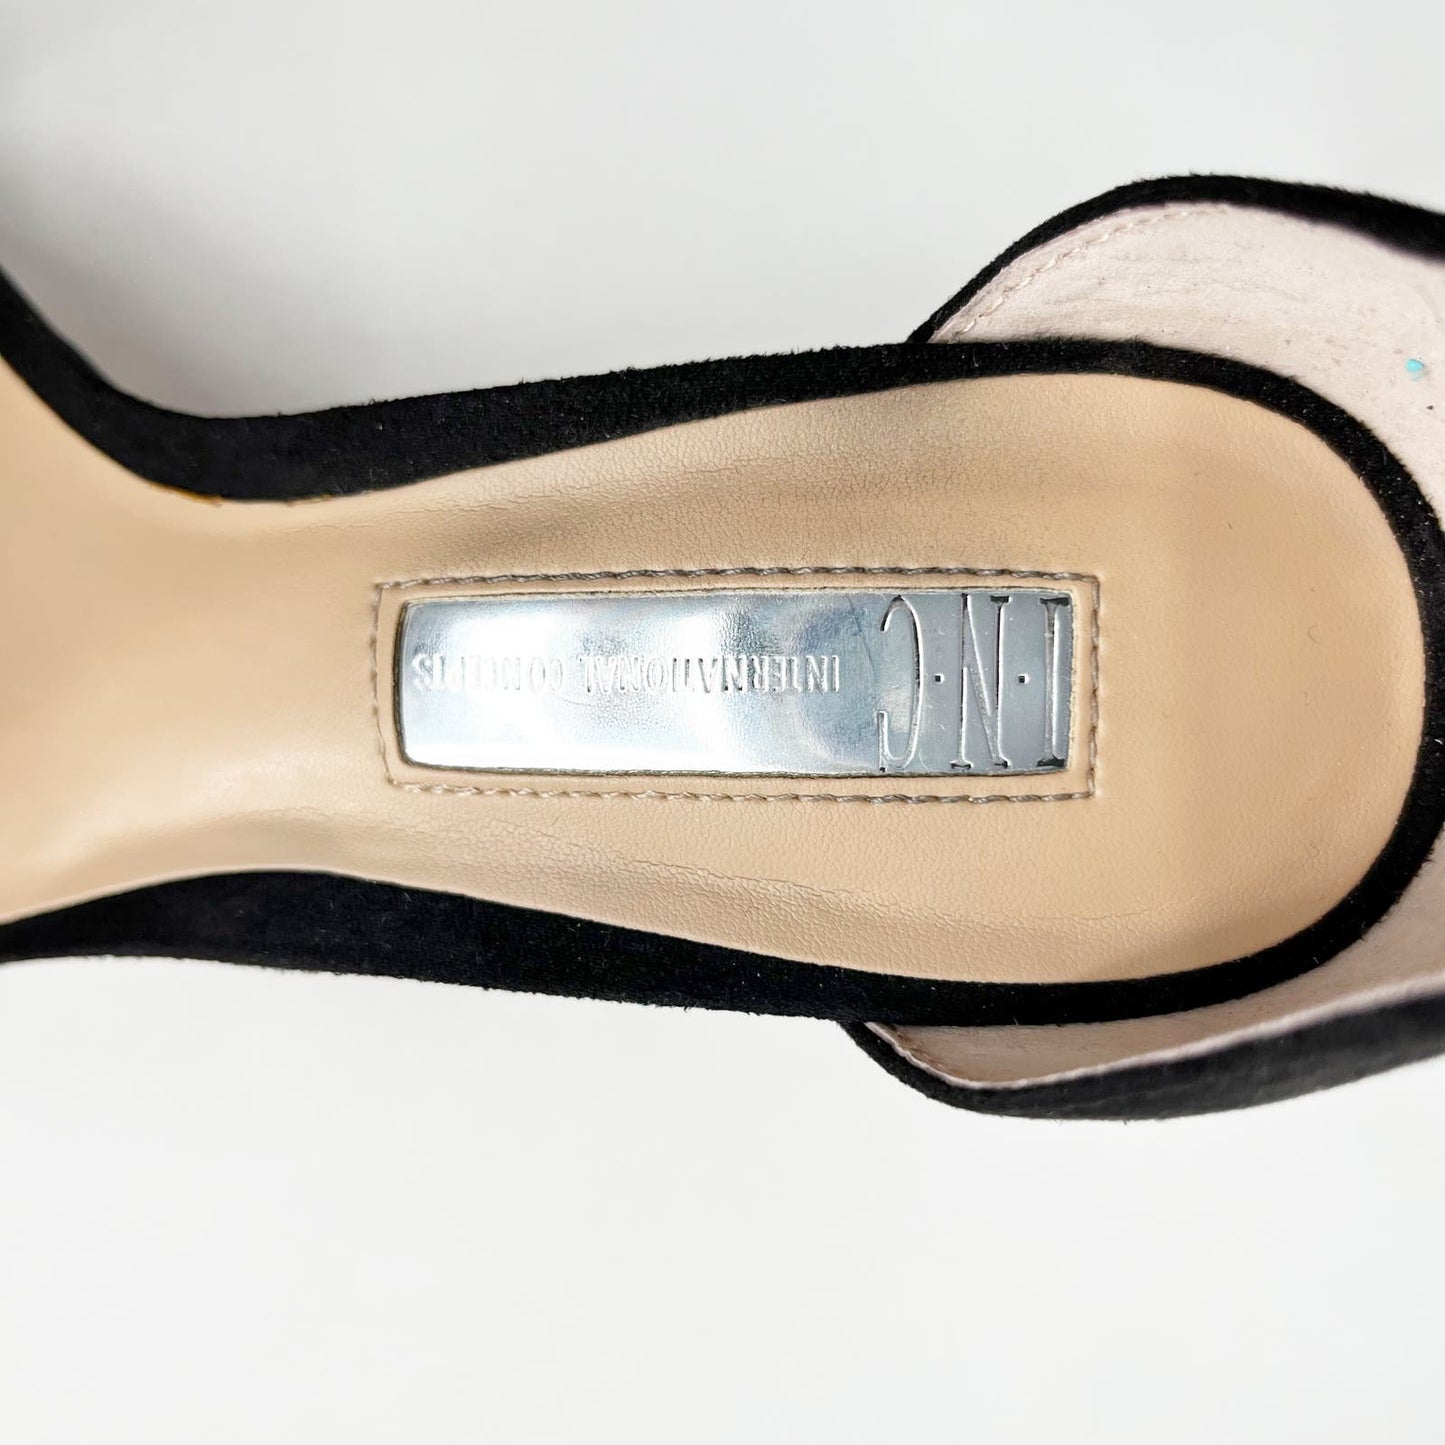 INC International Concepts Kivah Rhinestone Bow Sandal Heels Black 6.5